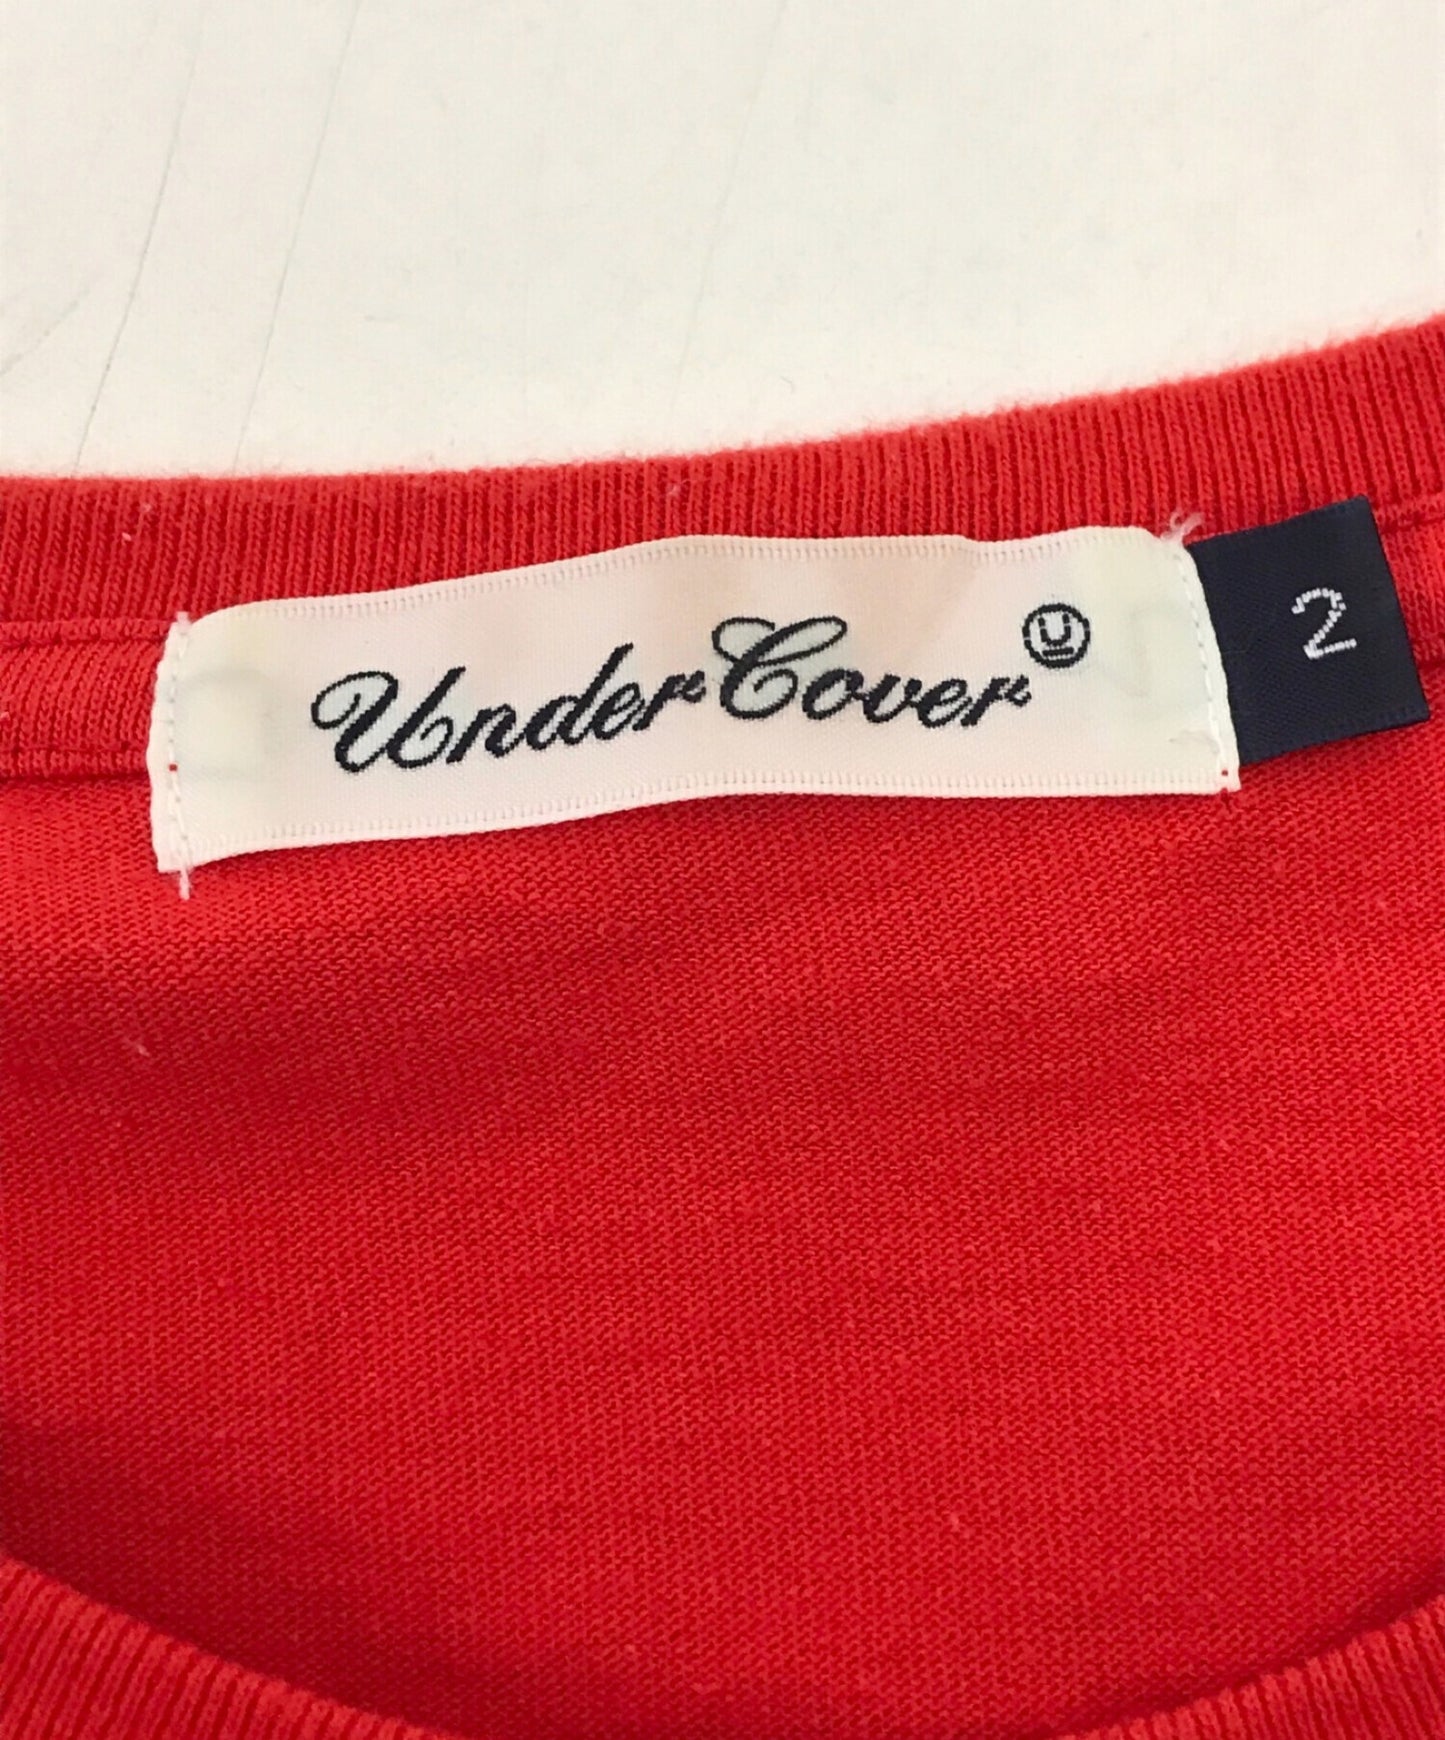 [Pre-owned] UNDERCOVER Printed T-Shirt / TEE CW 4Peoples / Clockwork Orange UCX3810